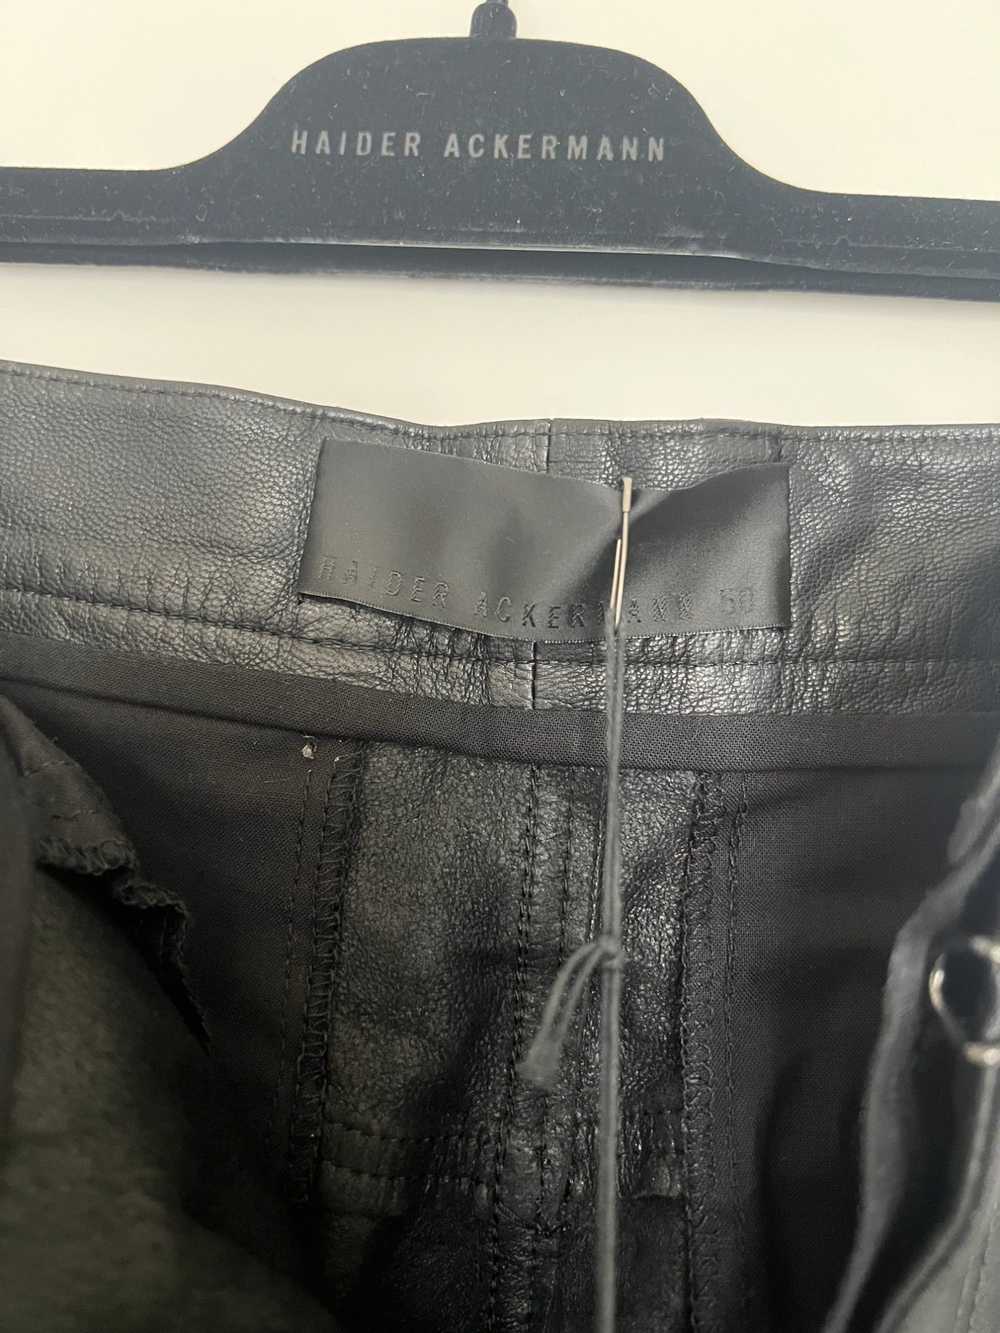 Haider Ackermann SS19 Lasercut Leather Trousers - image 4